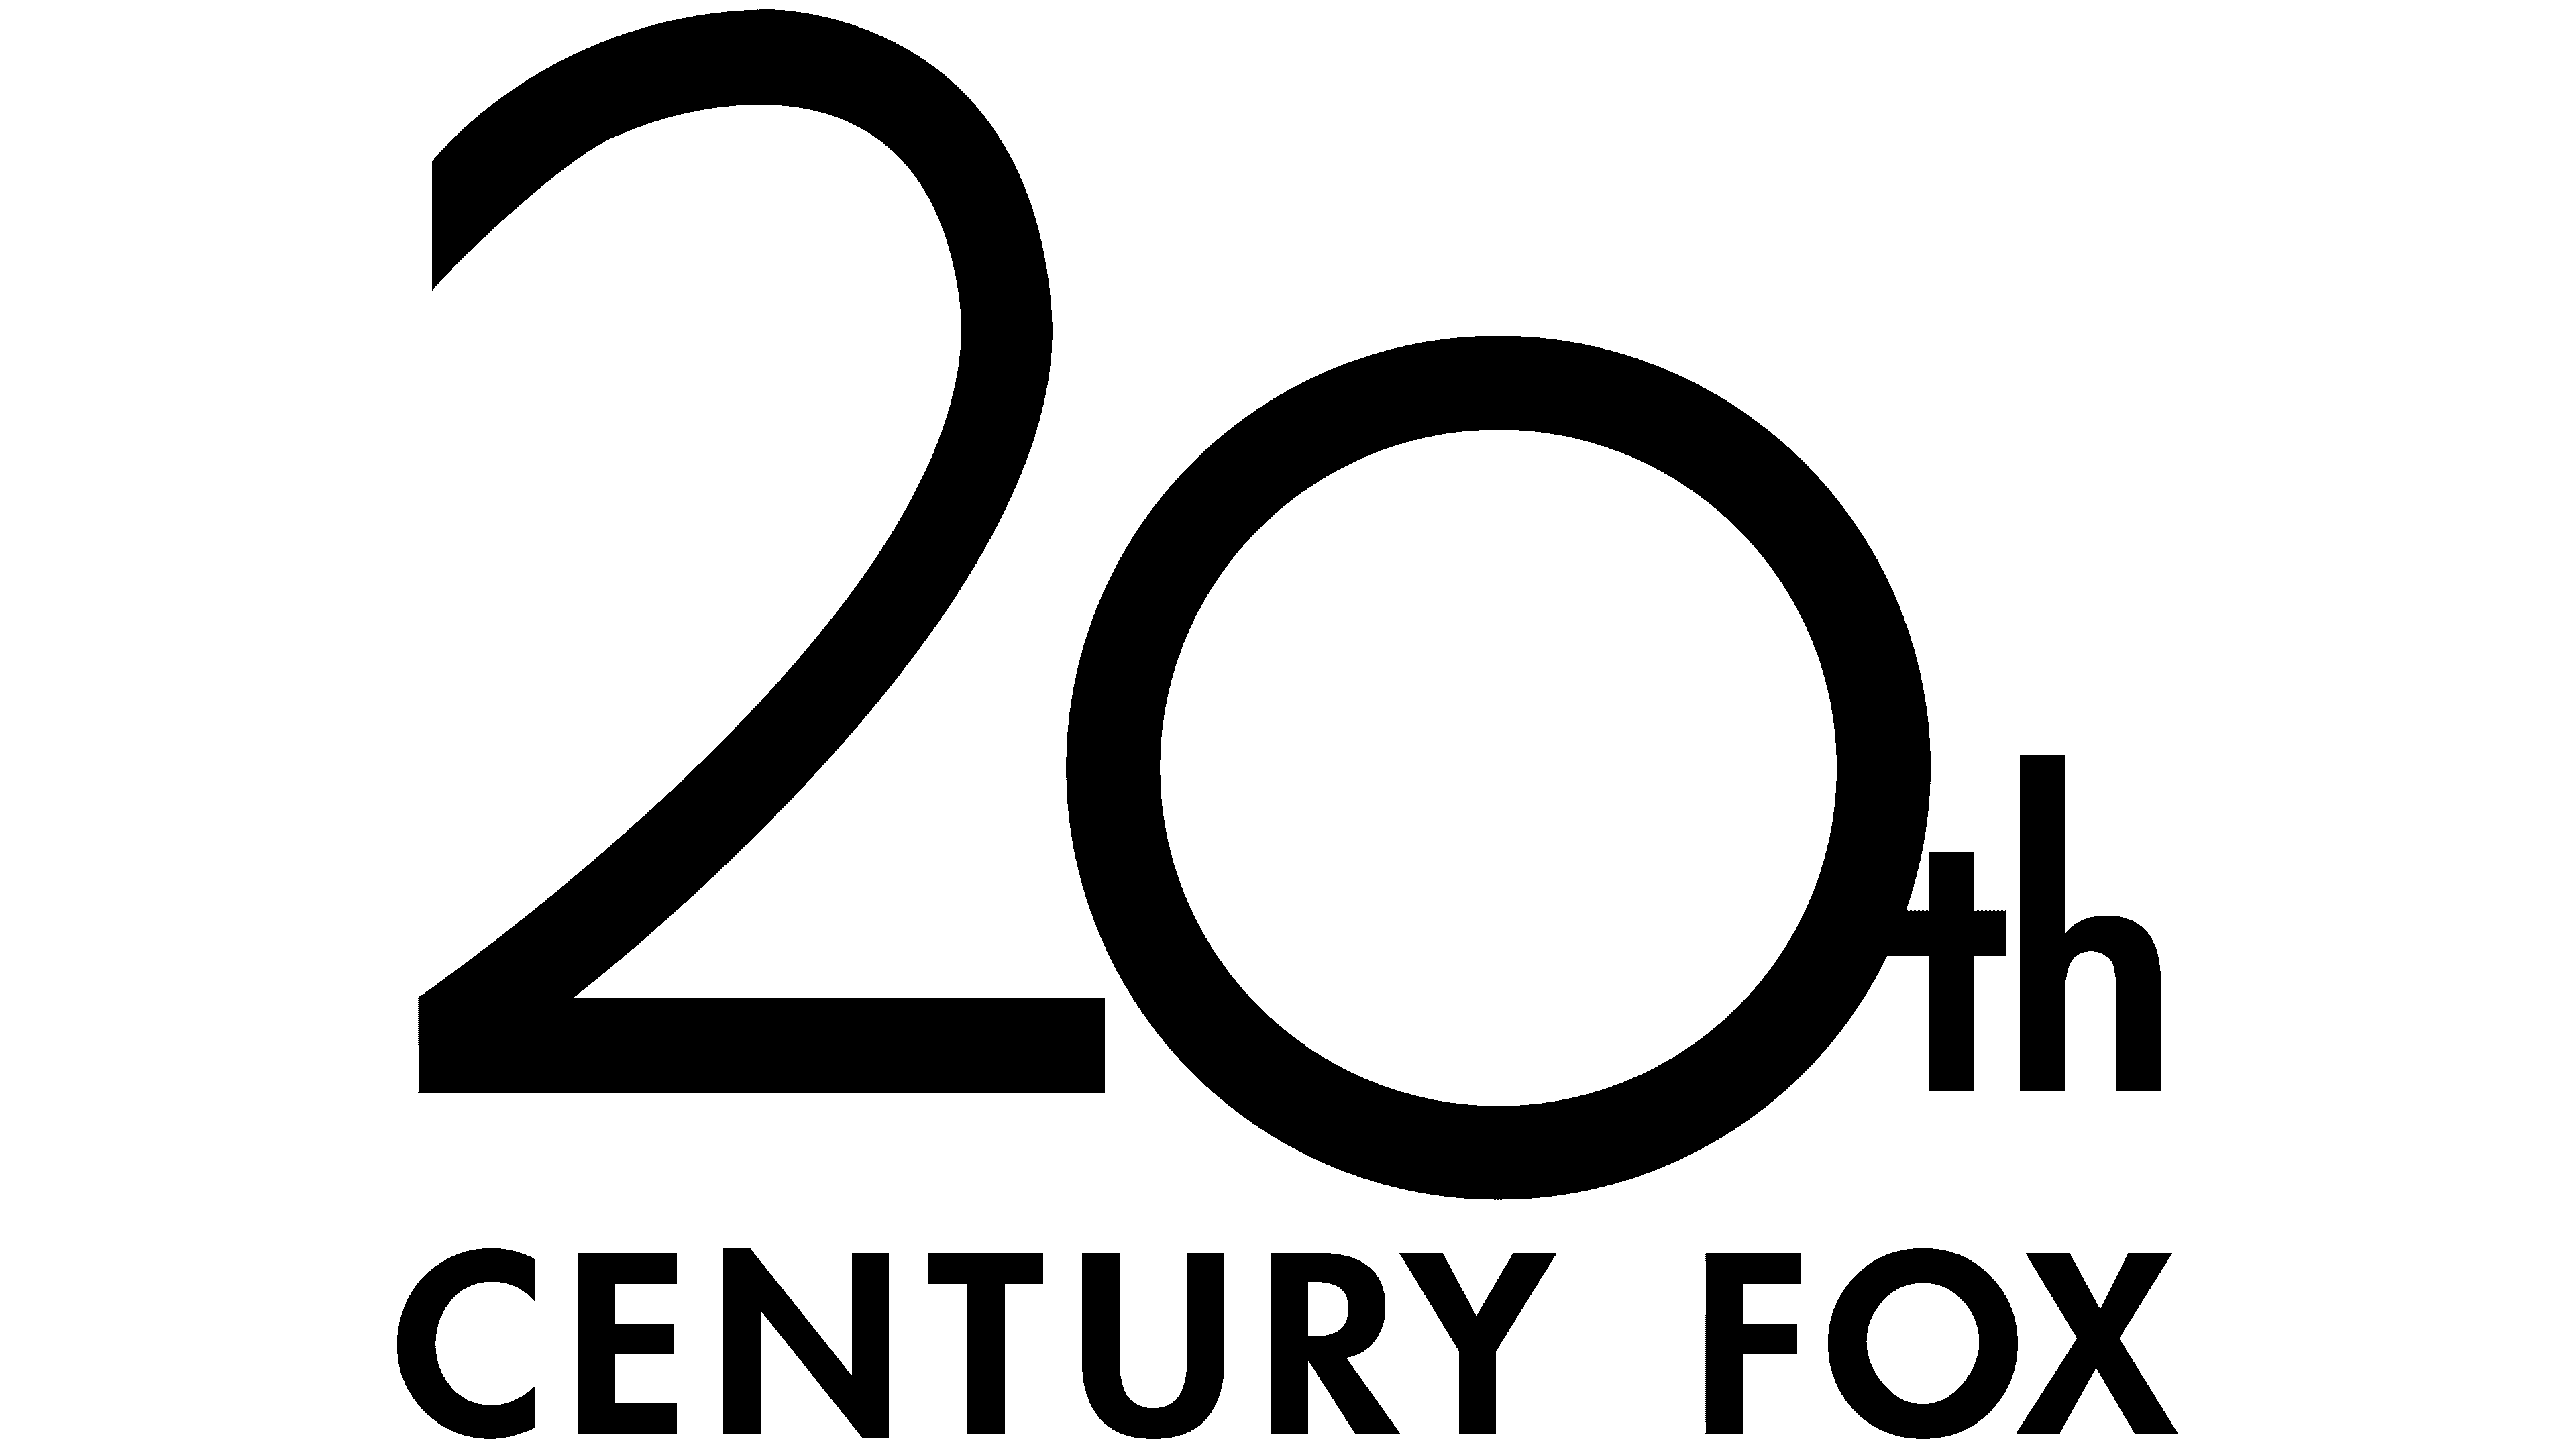 20th century fox intitutional logo research